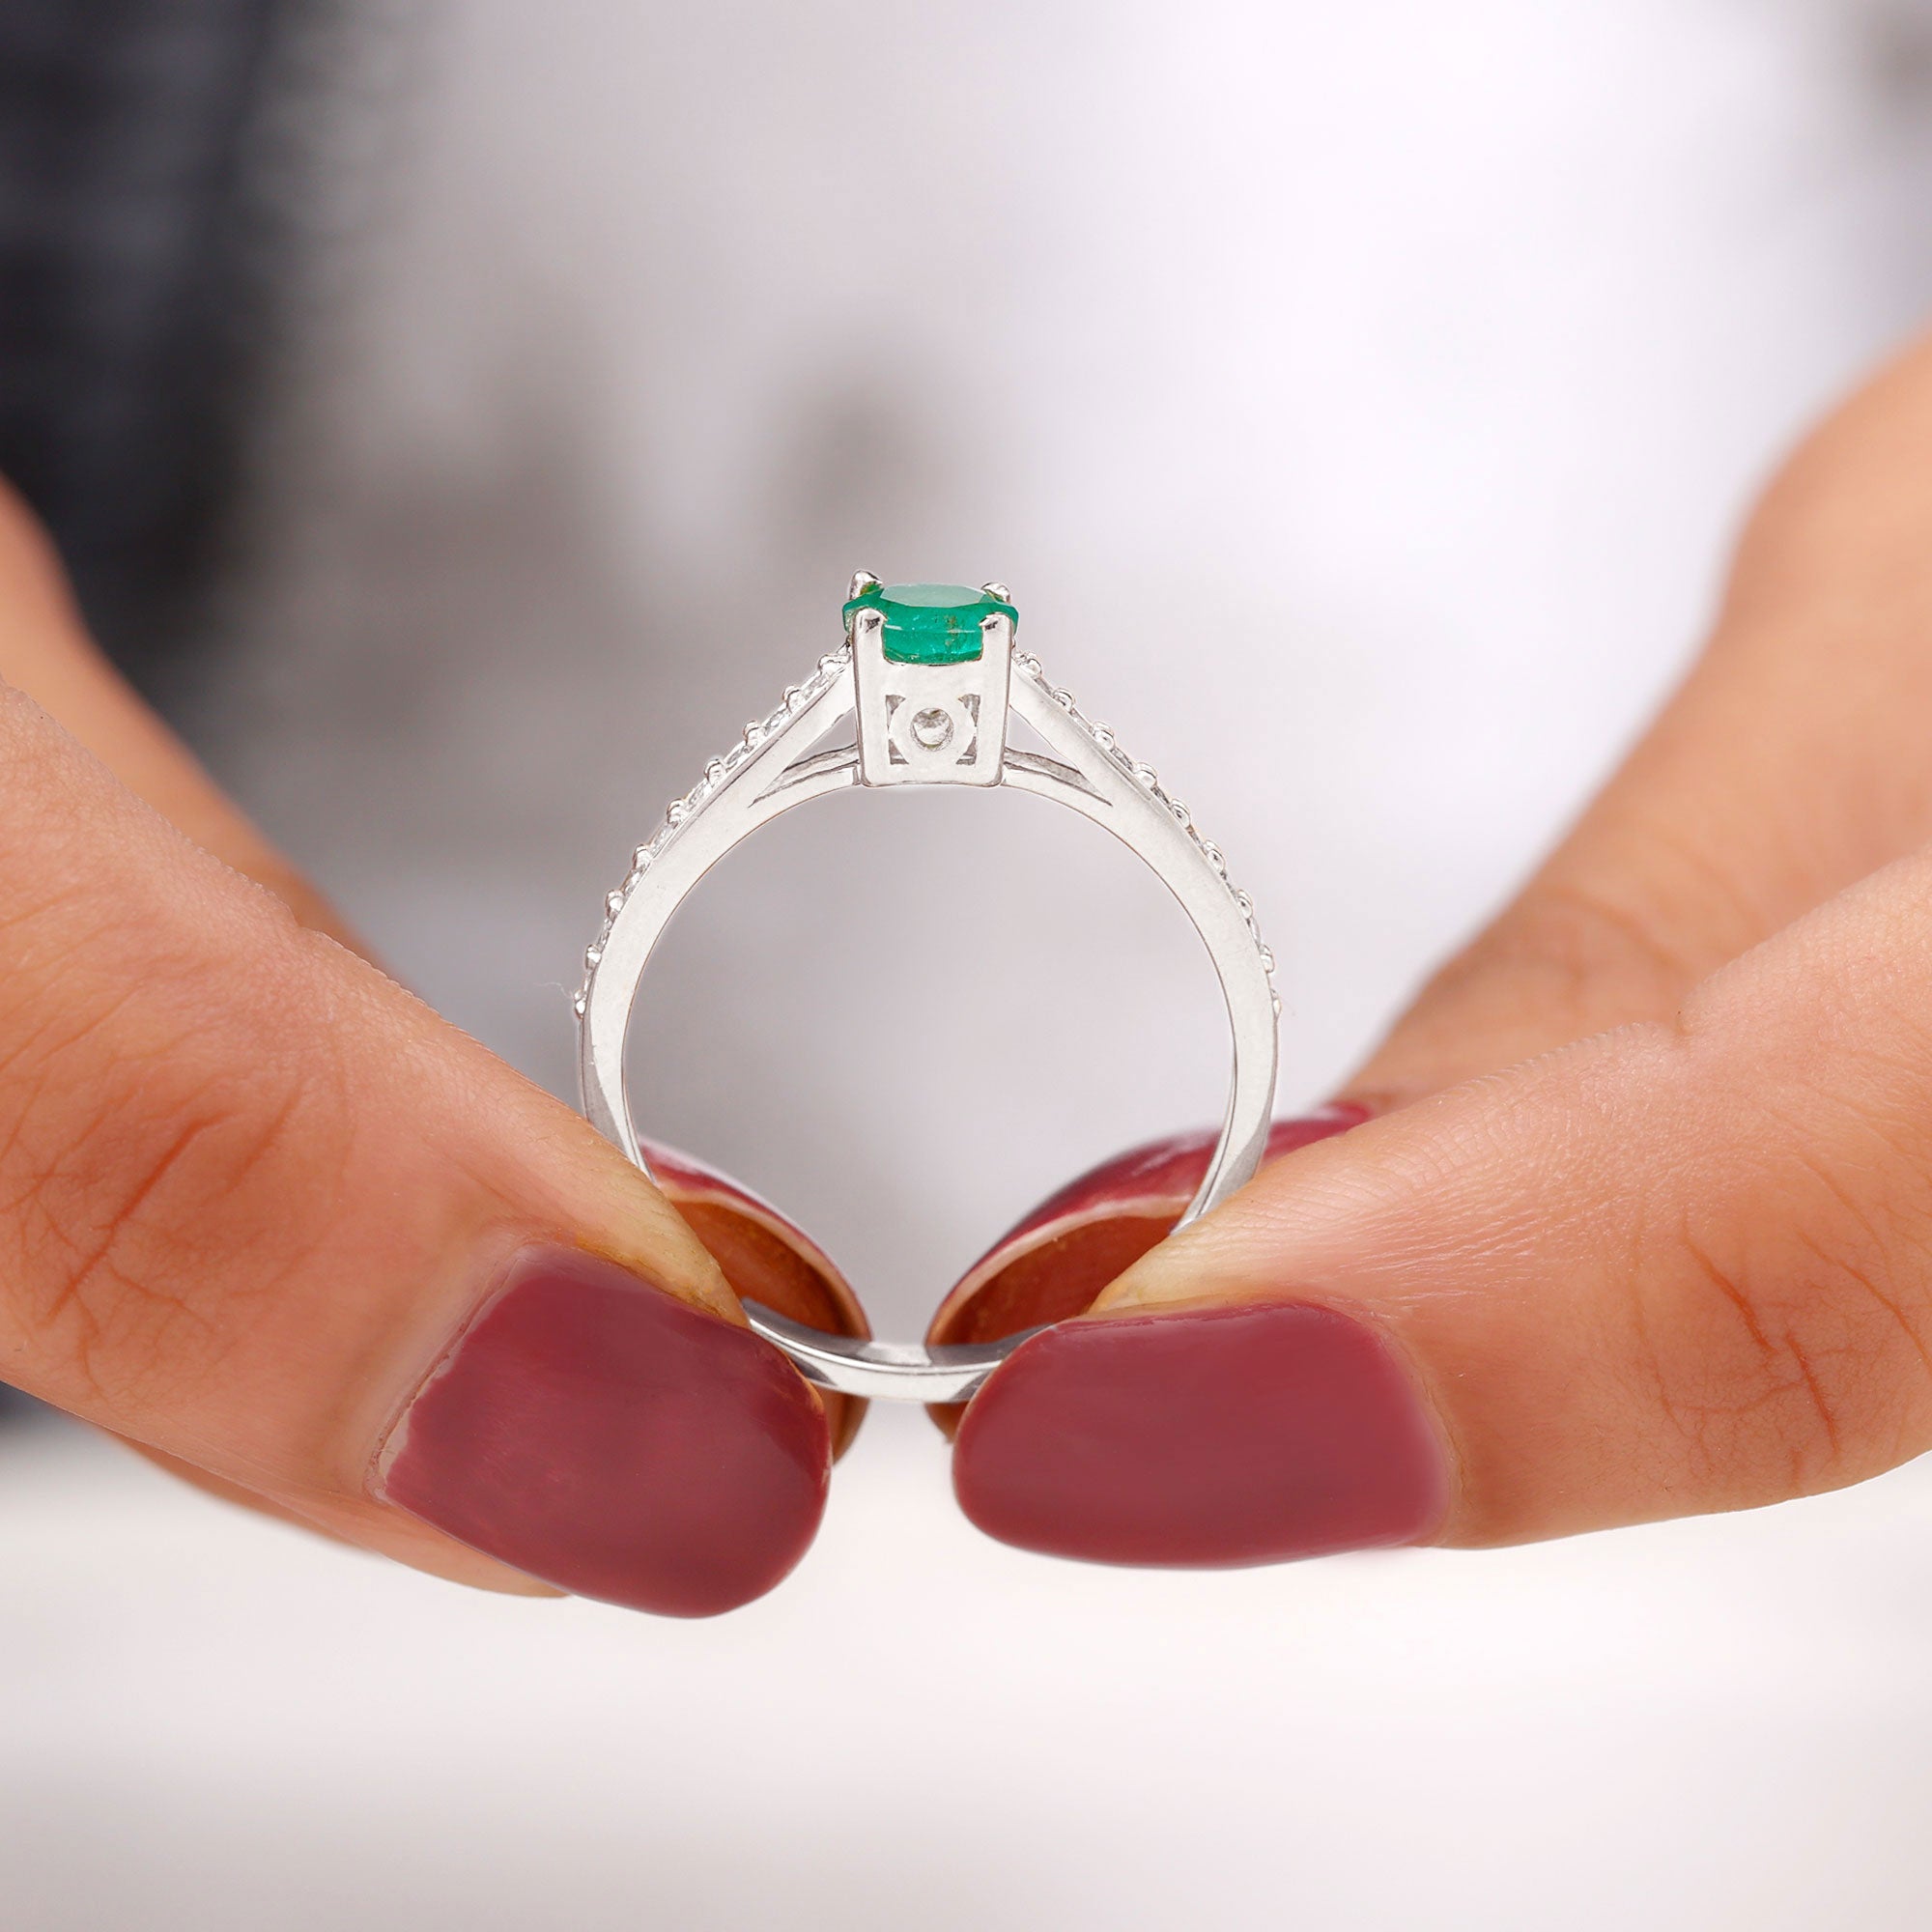 1 CT Classic Emerald and Diamond Ring Emerald - ( AAA ) - Quality - Rosec Jewels